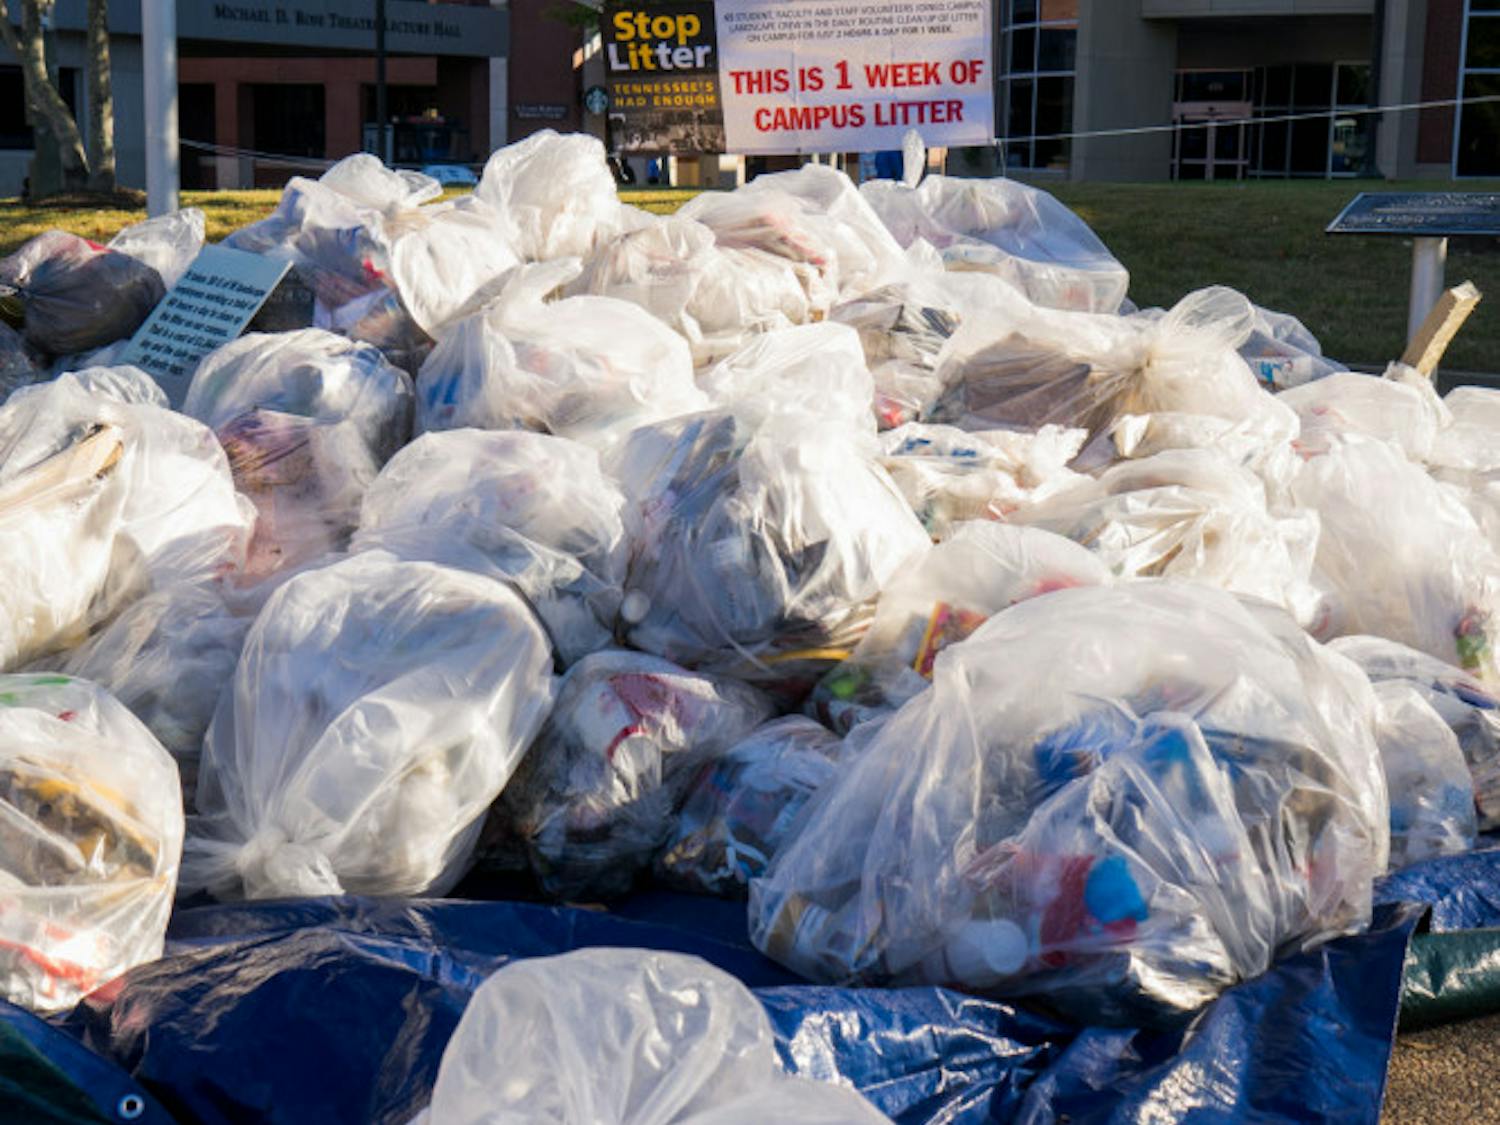 Bags of Trash shows one week of liter